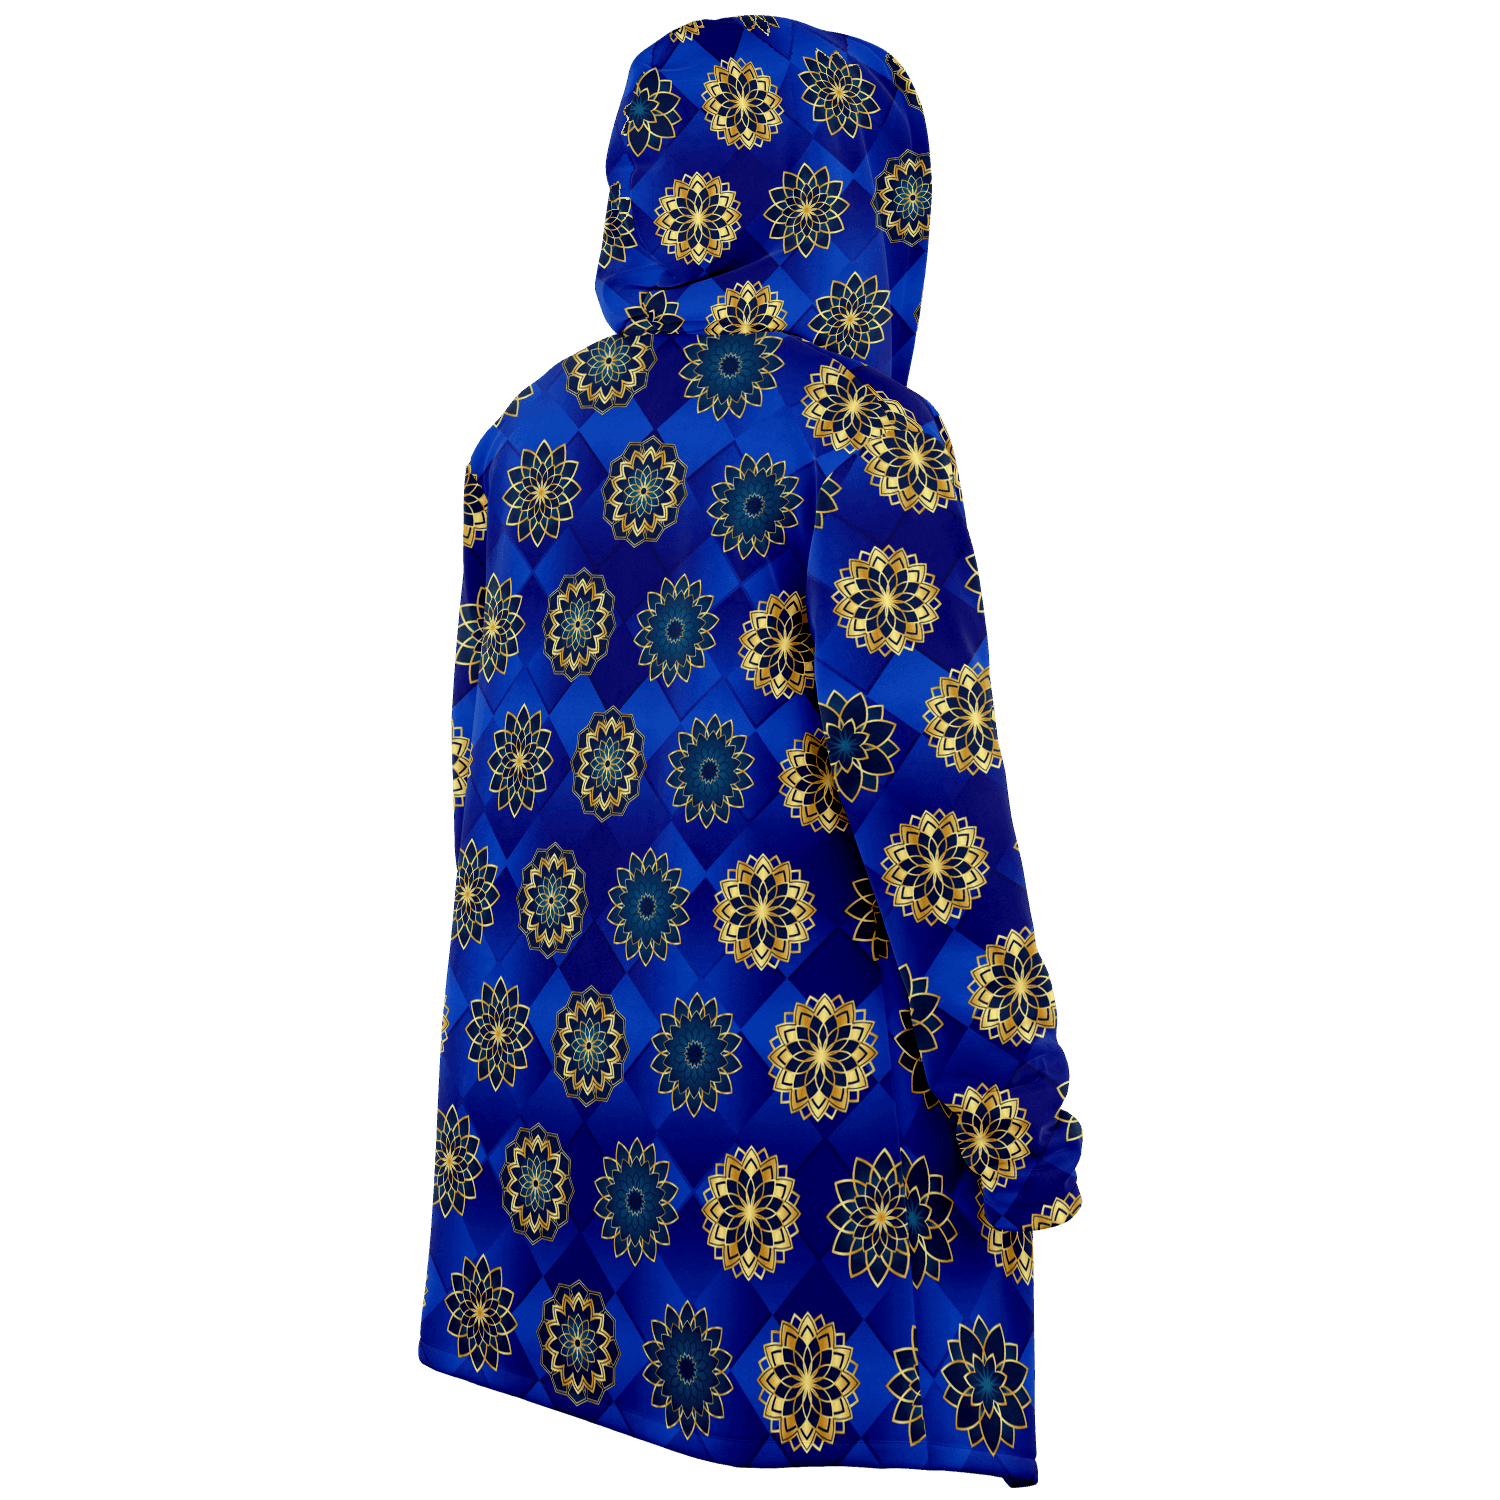 Blue Diamond Golden Mandala Luxurious Cloak - ELIVIOR